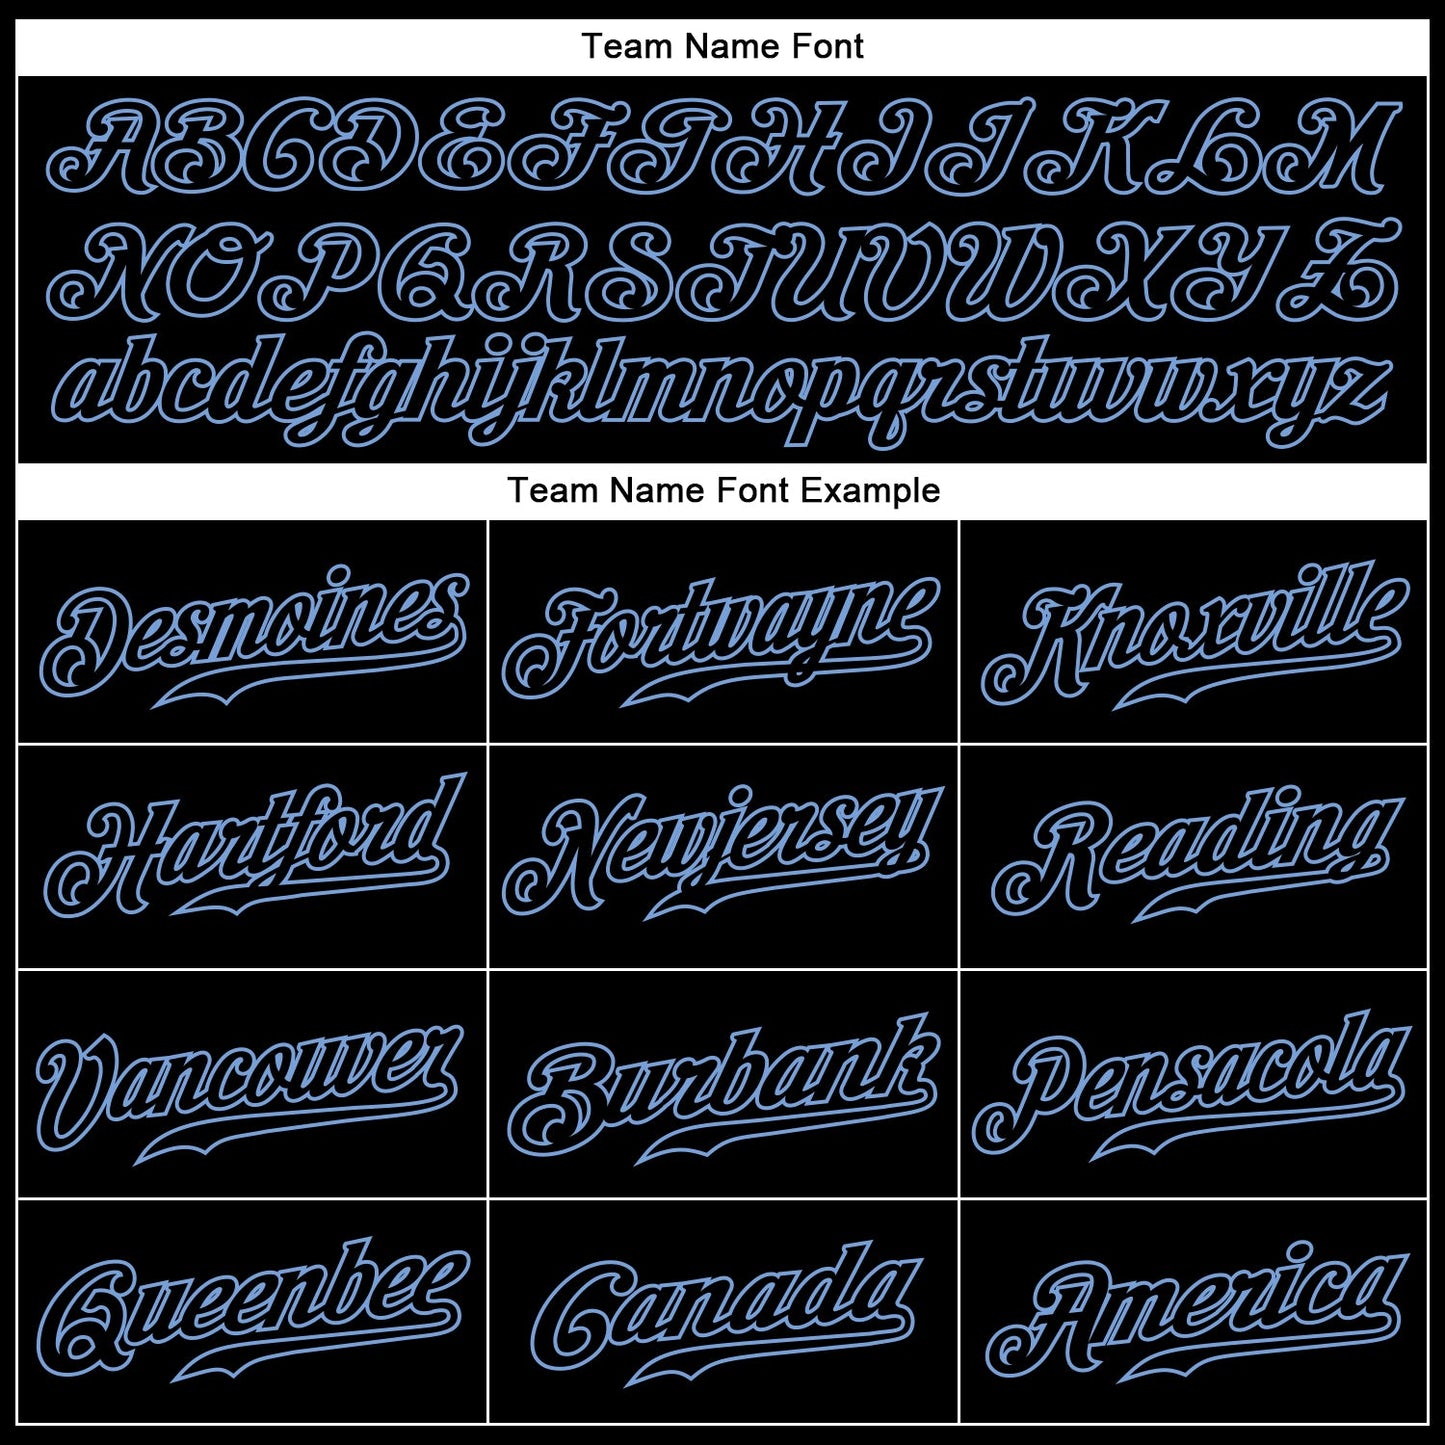 Custom Graffiti Pattern Black-Light Blue 3D Authentic Baseball Jersey